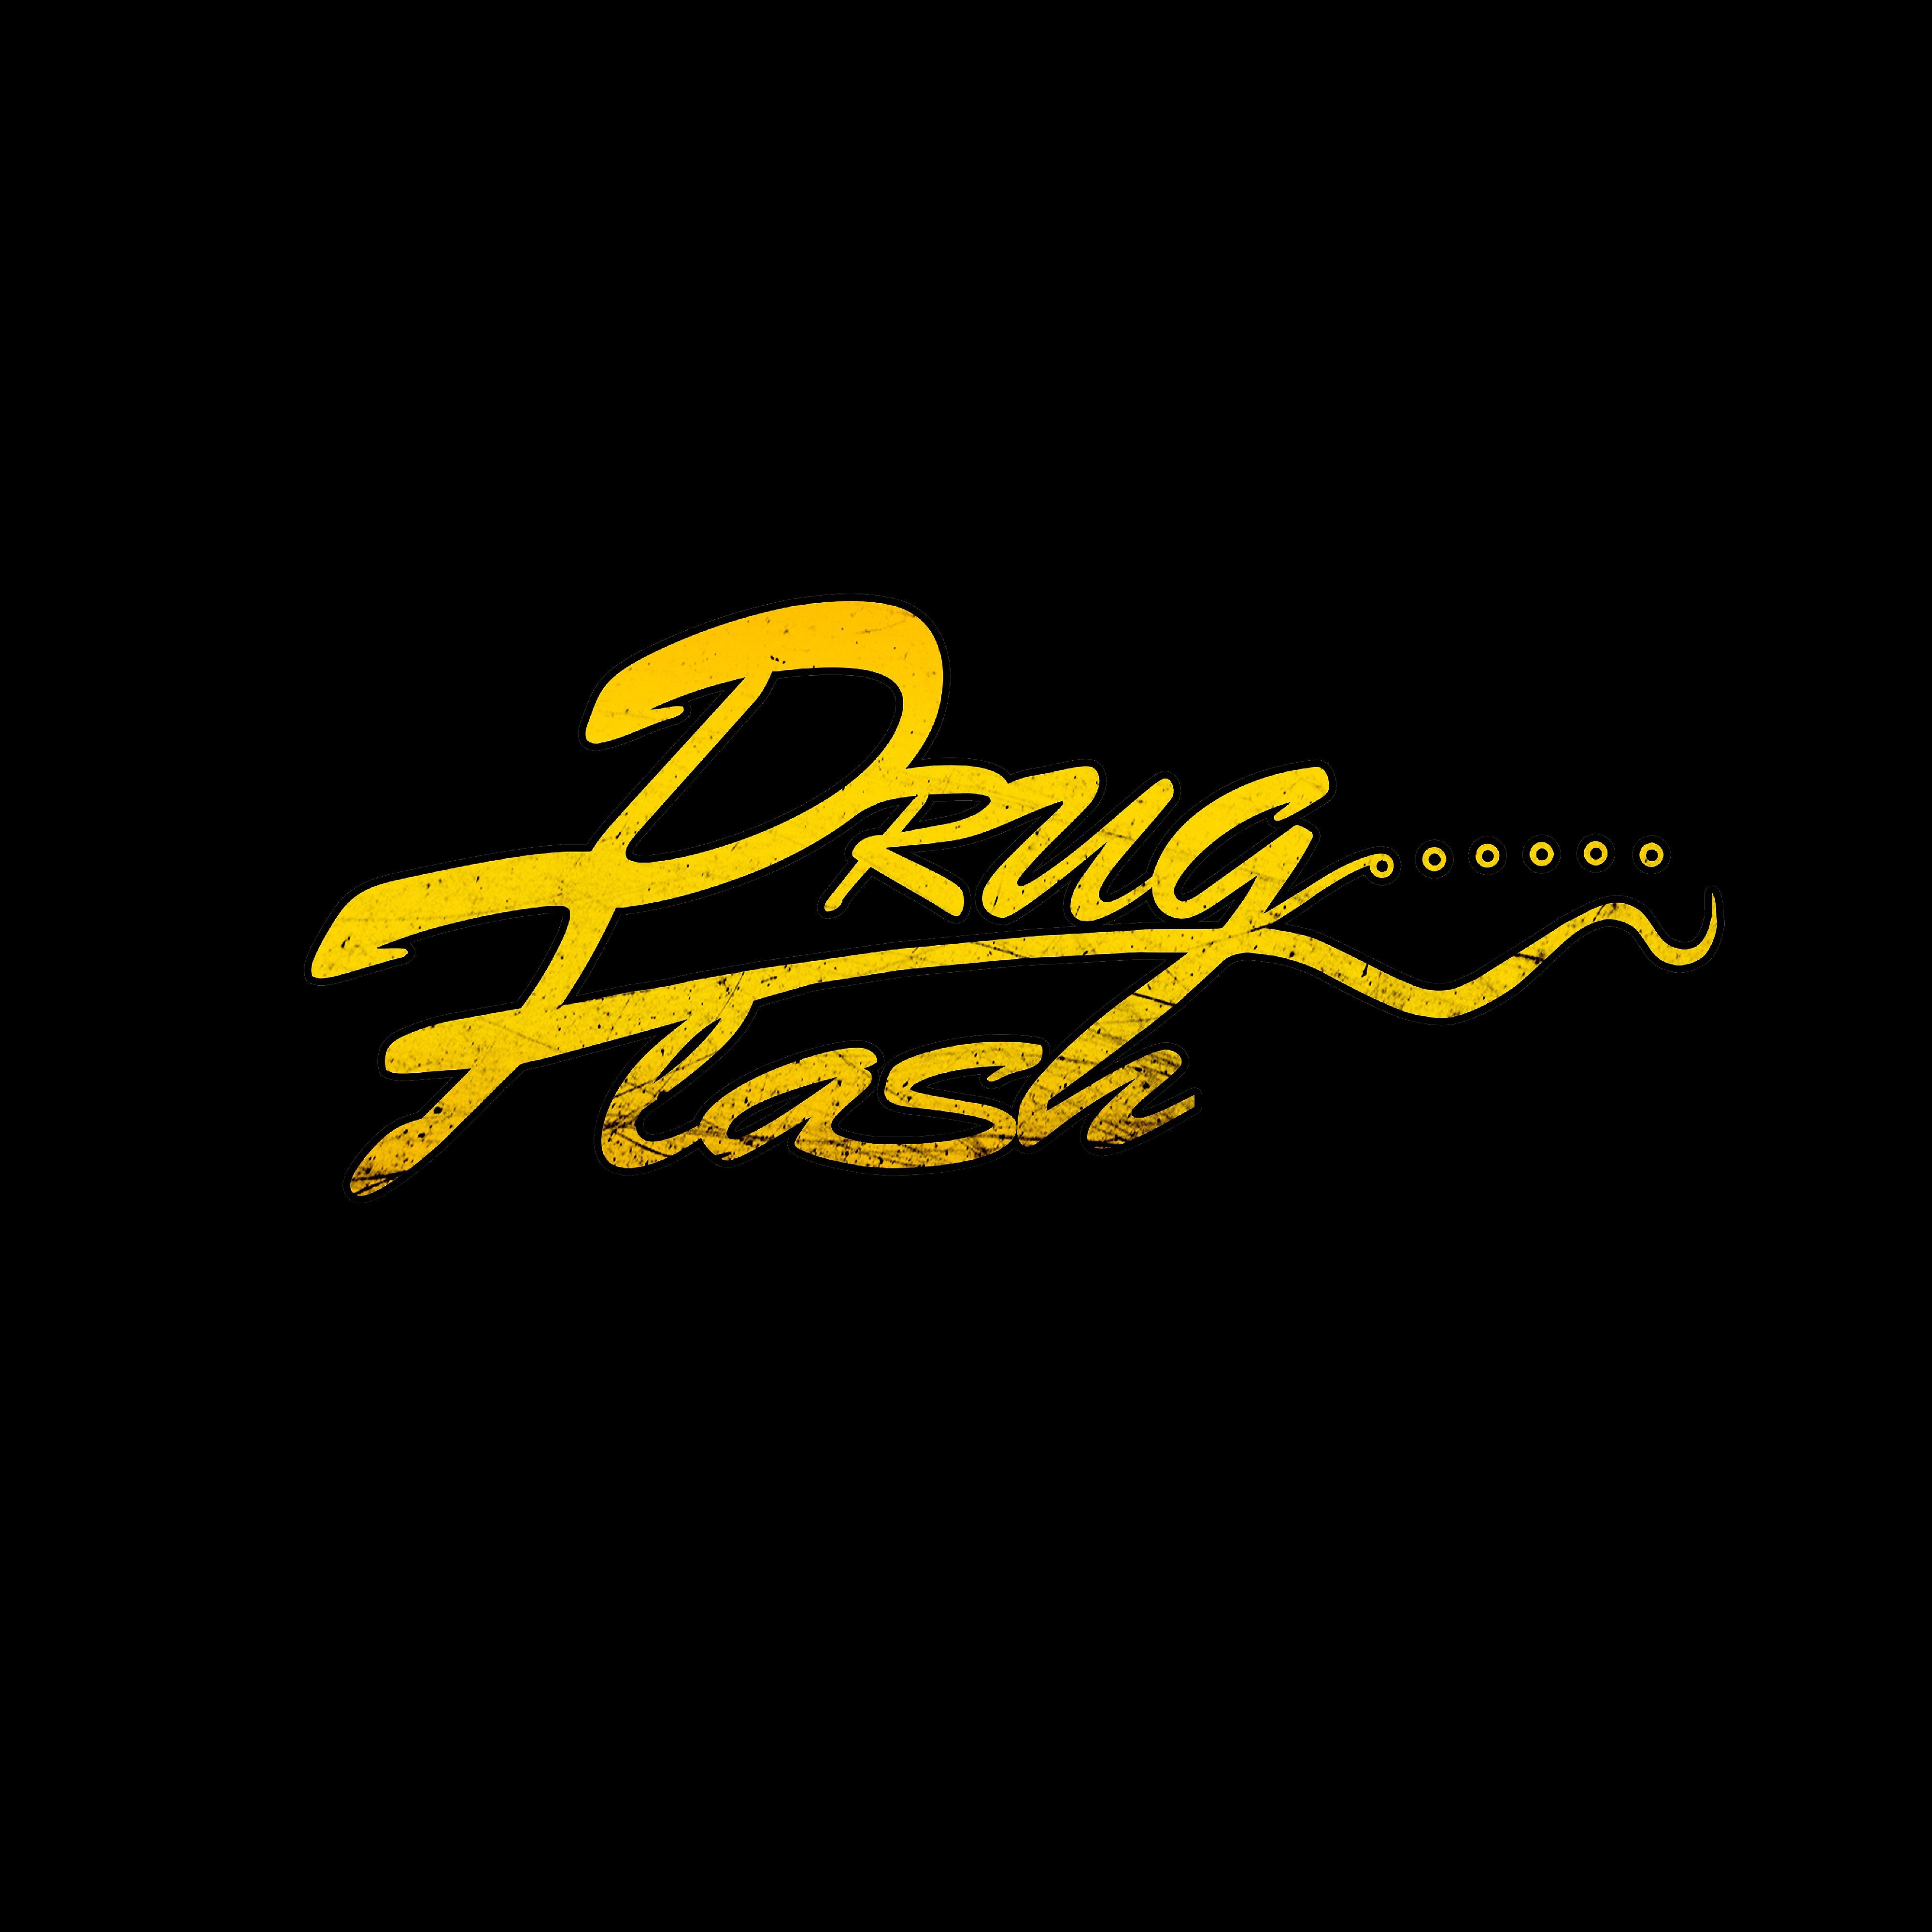 Flash friend. Флеш альбом. Drug Flash. Drug Flash лого. Drug Flash mixтейп.